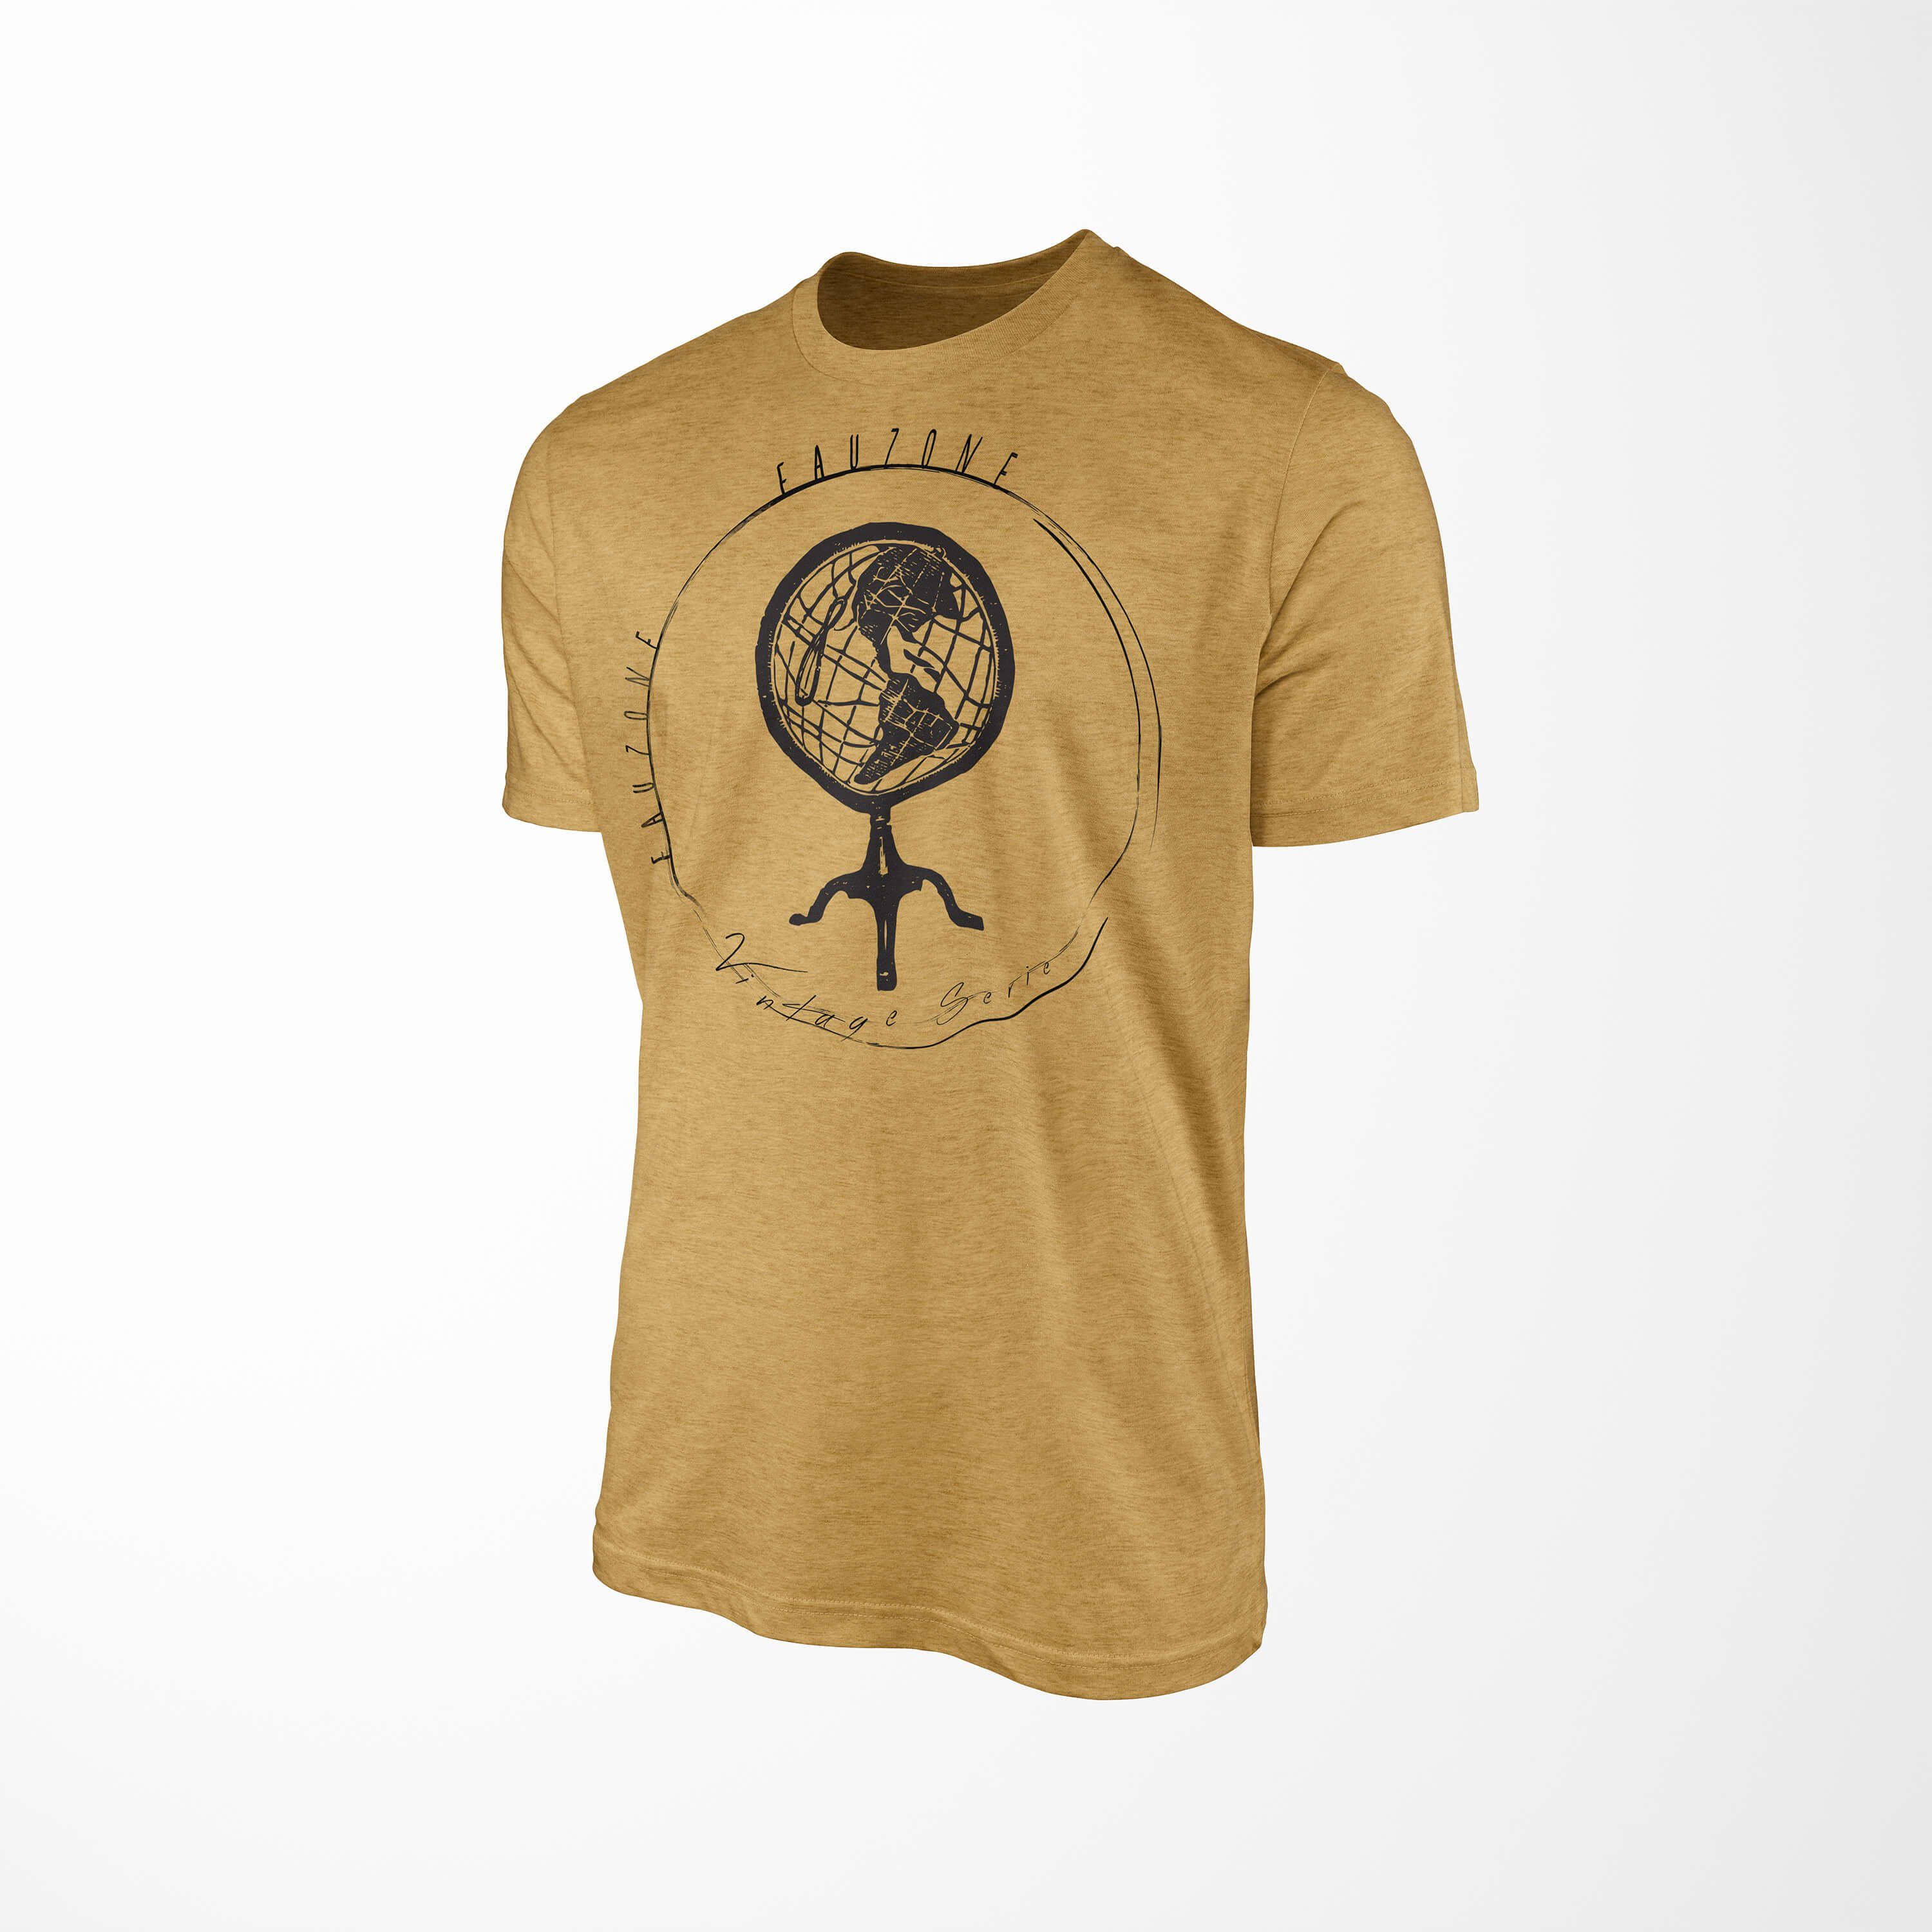 Sinus Art T-Shirt Herren Antique T-Shirt Globus Gold Vintage